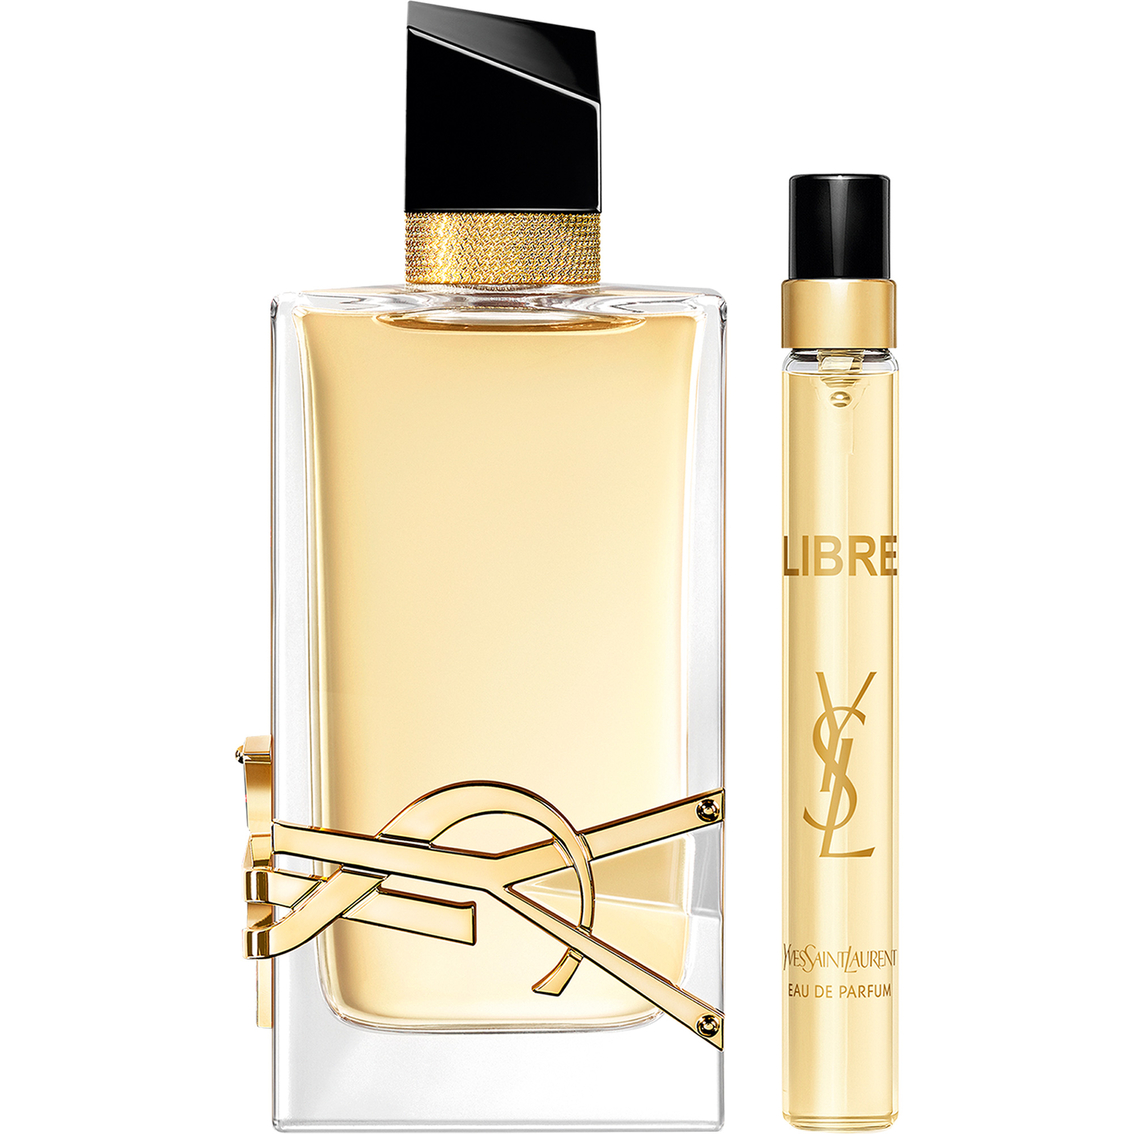 Sale > ysl libre perfume set > in stock